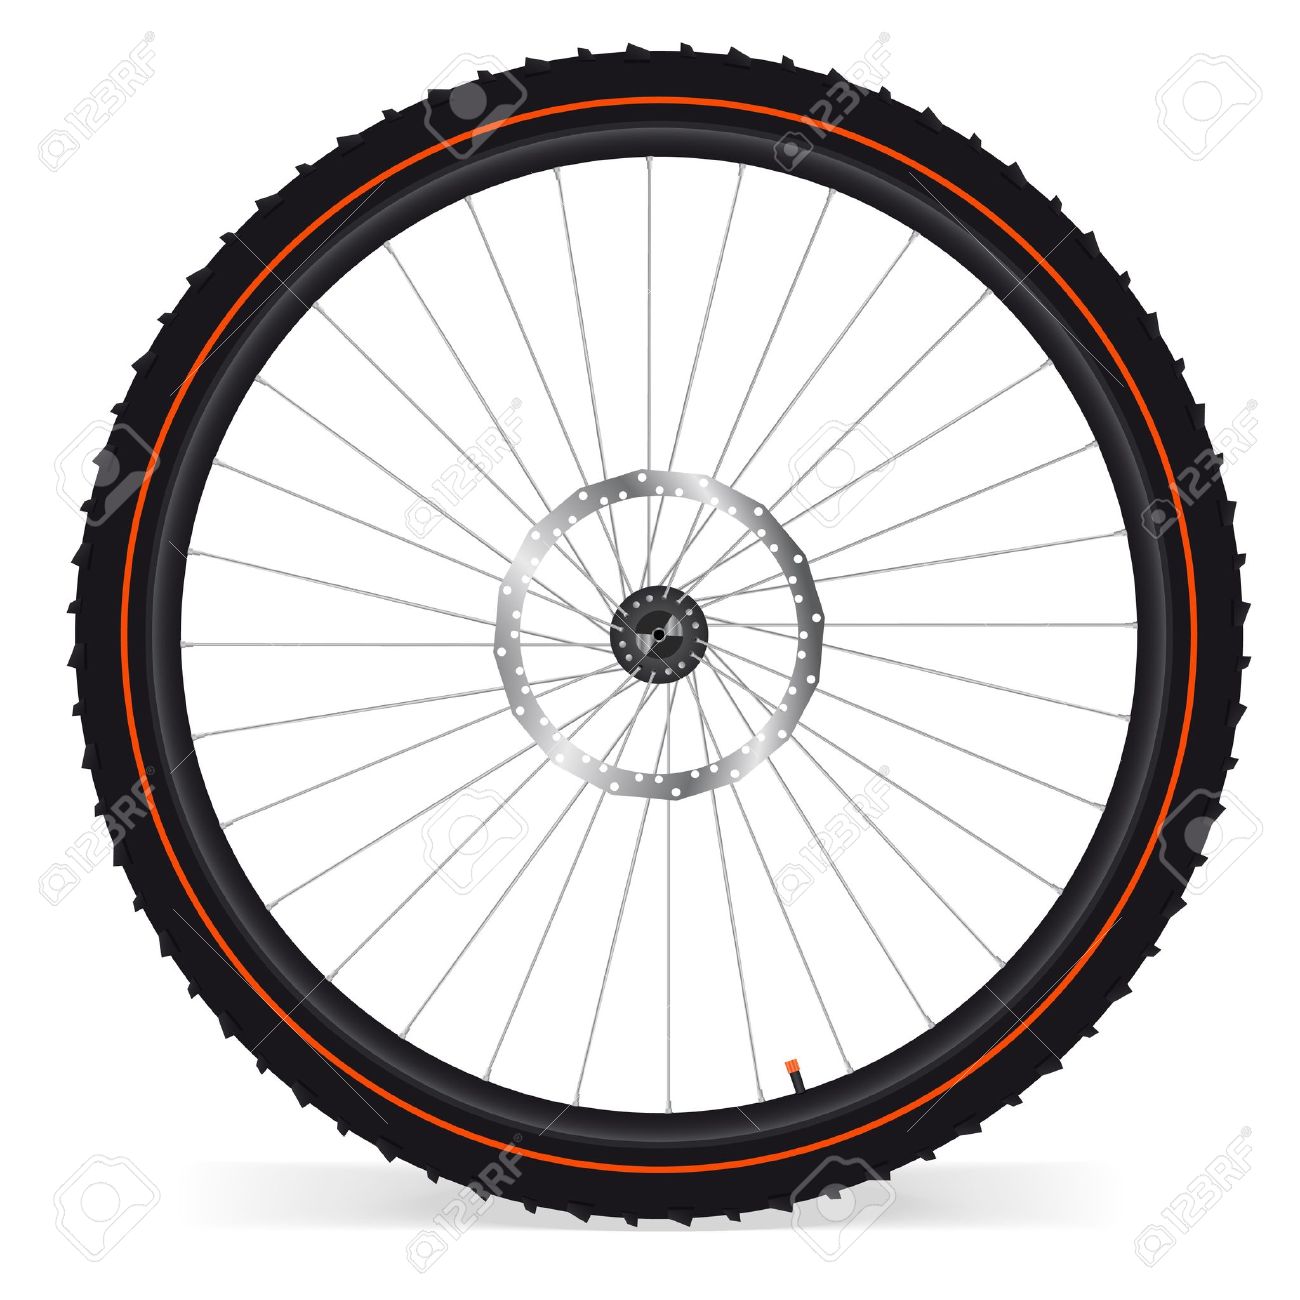 bicycle wheel clip art free - photo #31